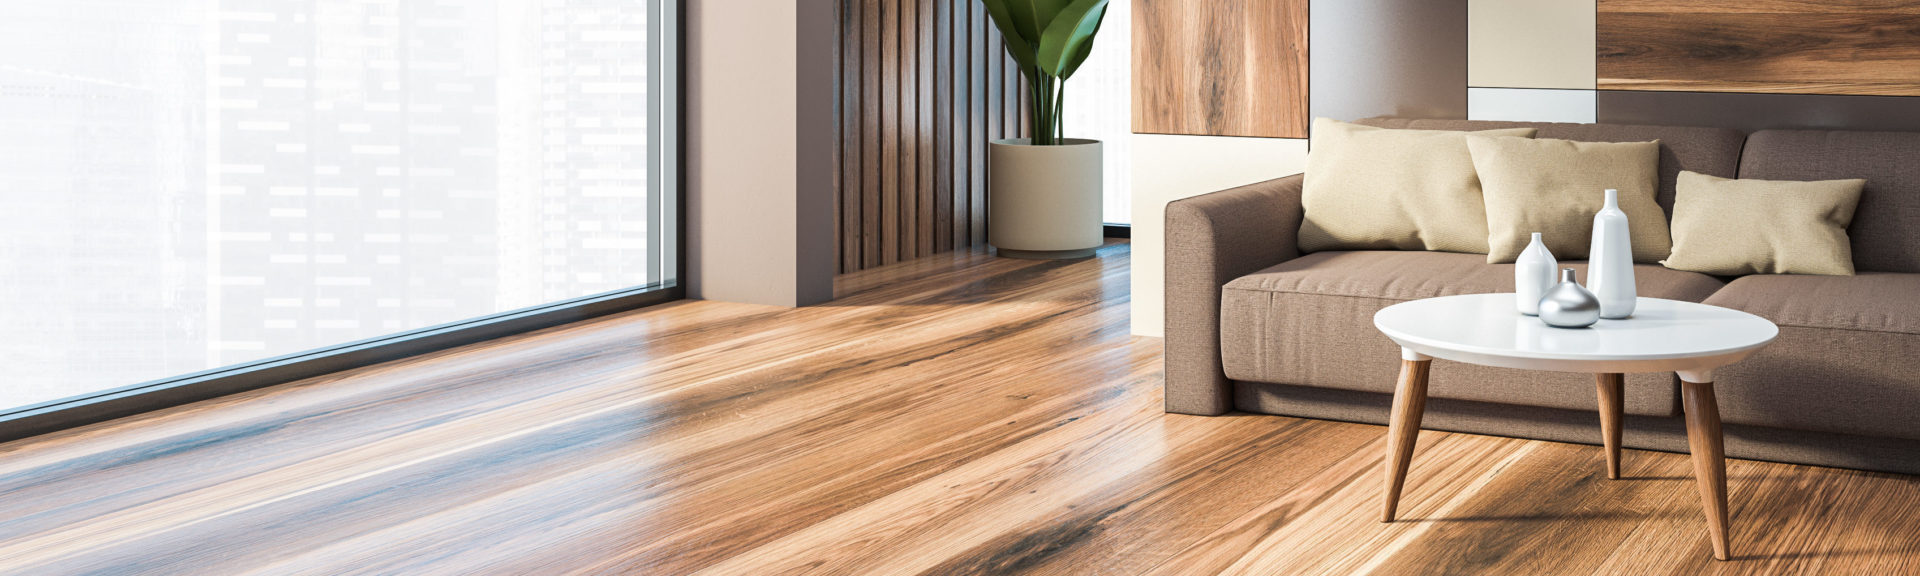 Resins for luxury wood flooring